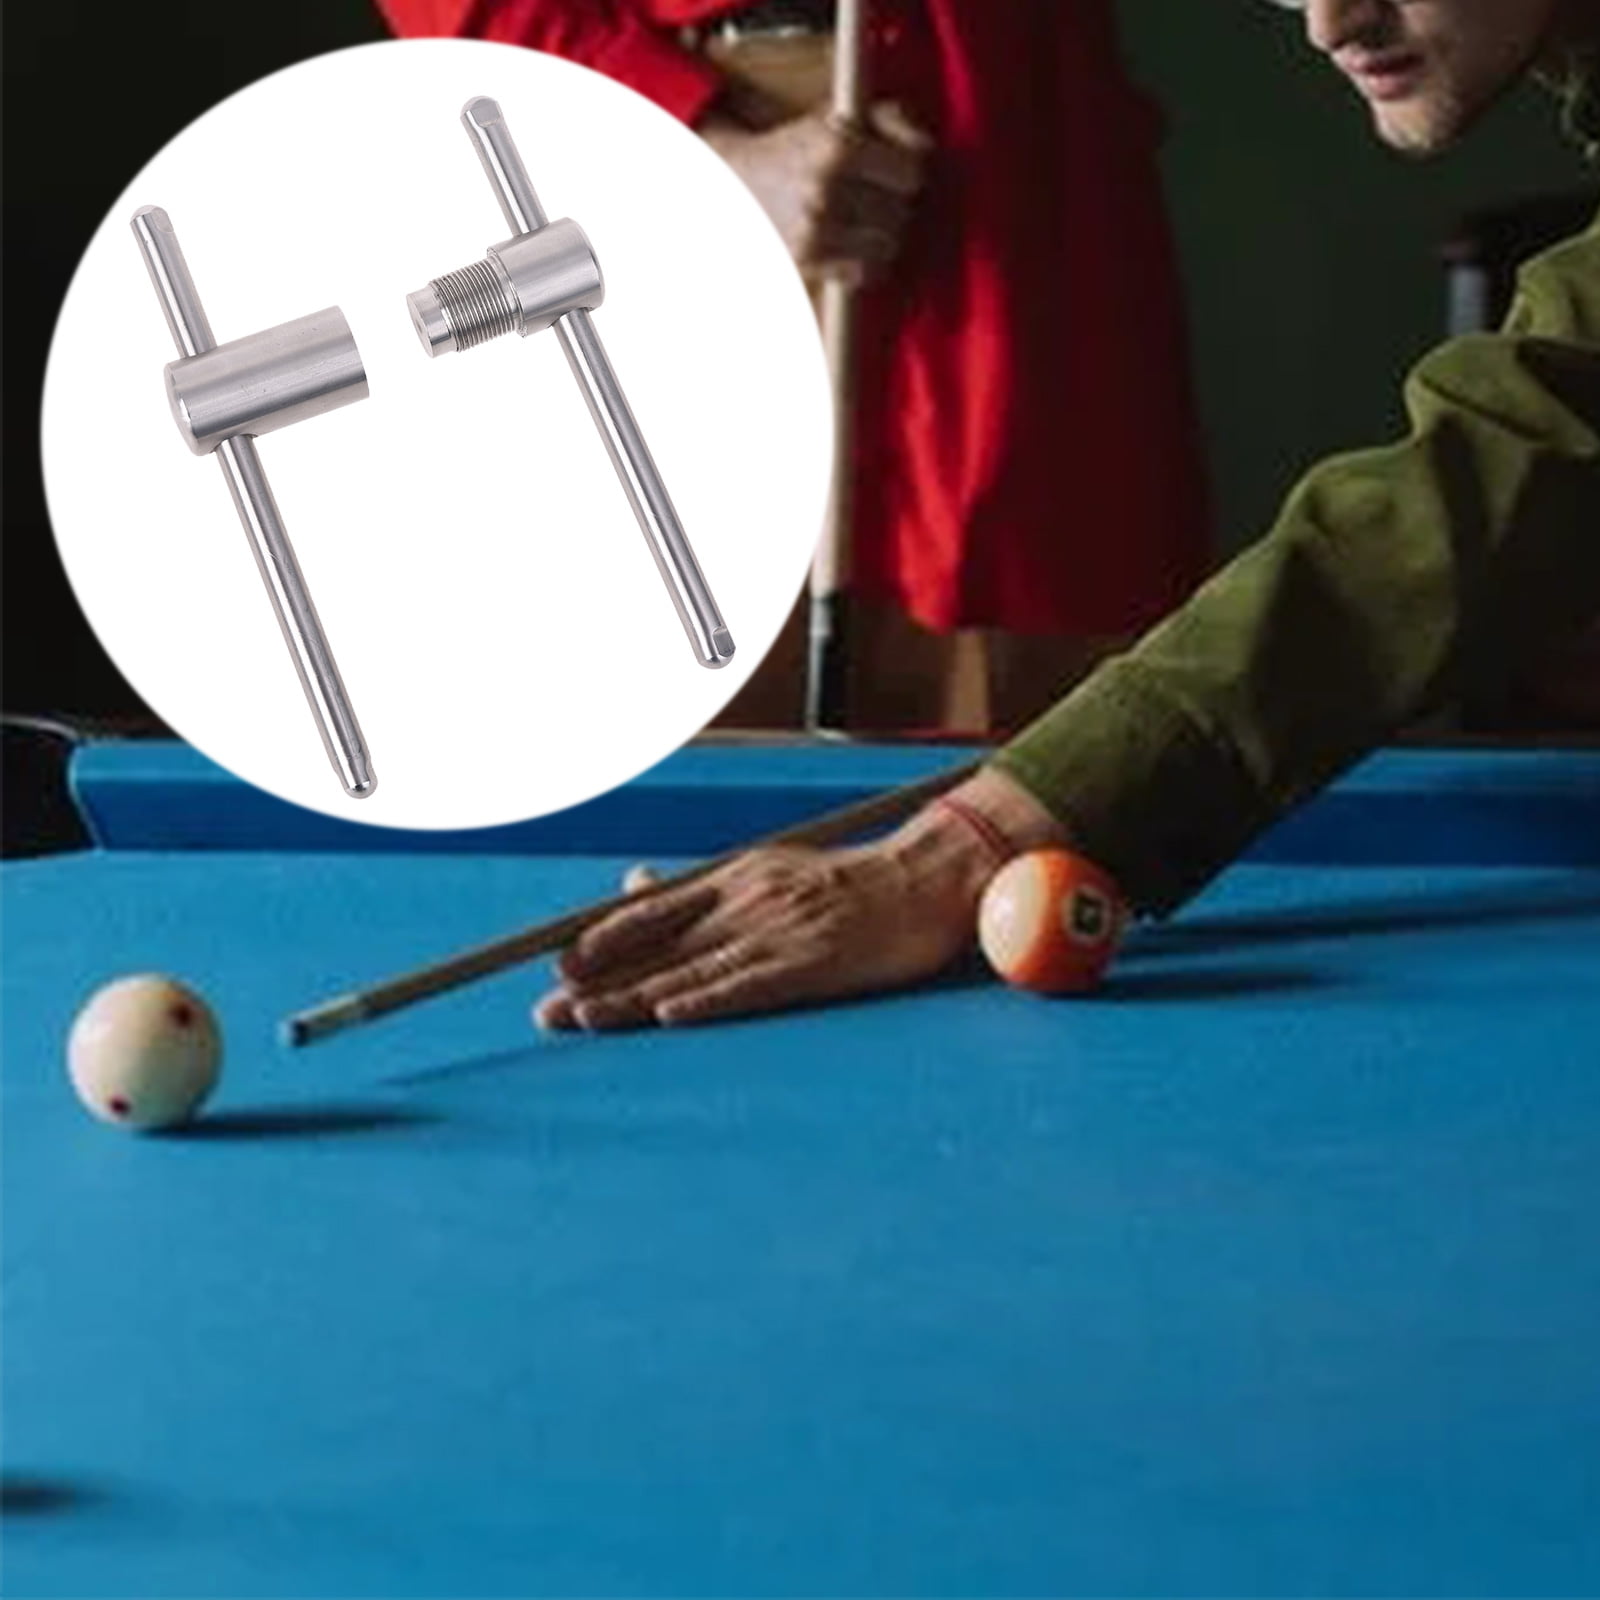 BOOYOU Stainless Steel Cue Tip Press Tool Shaper for 14mm Pool Snooker  Billiard Flat - Walmart.com